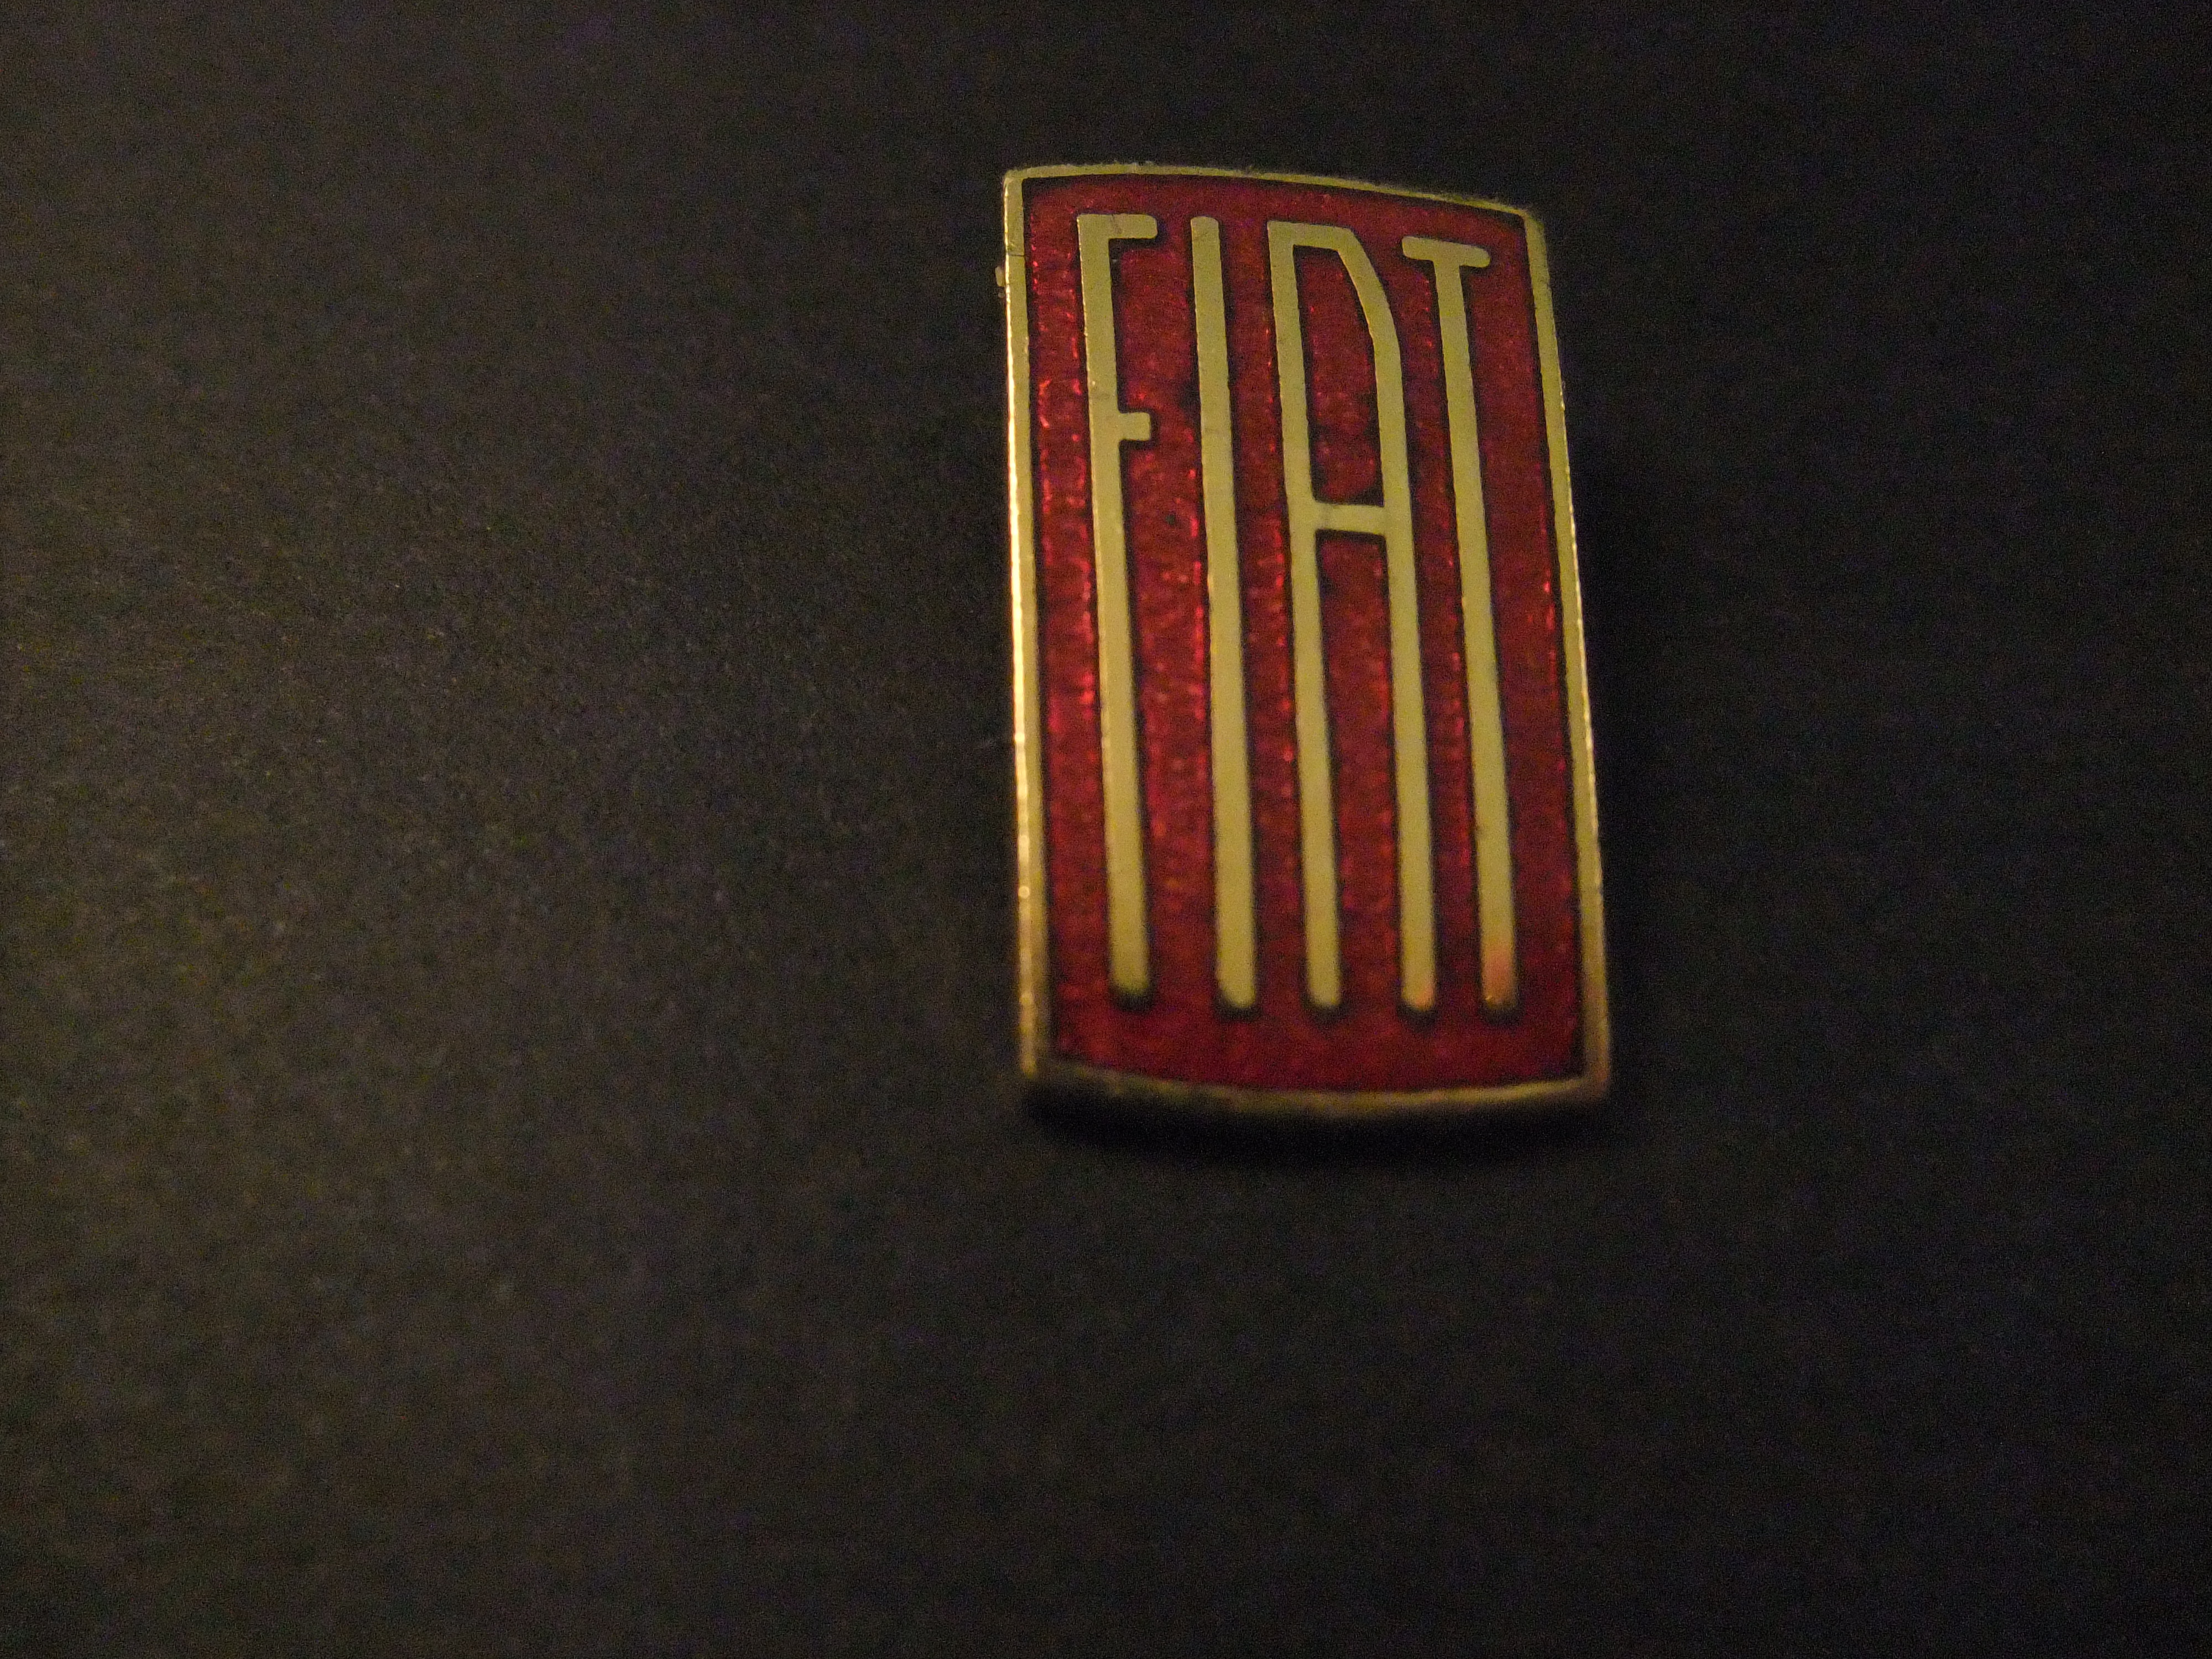 Fiat auto logo goudkleurige letters